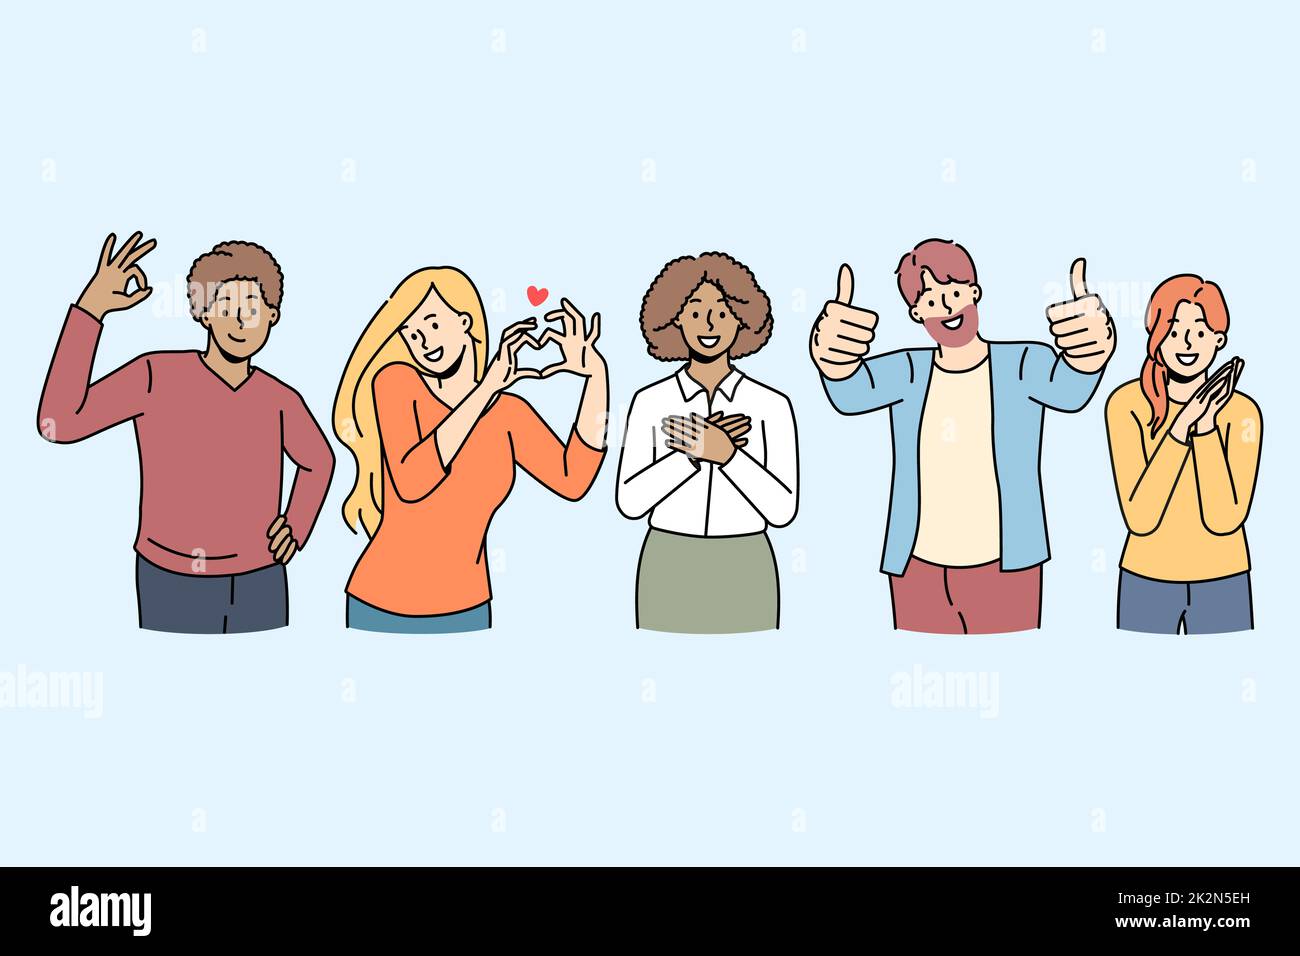 Happy people show diverse hand gestures Stock Photo